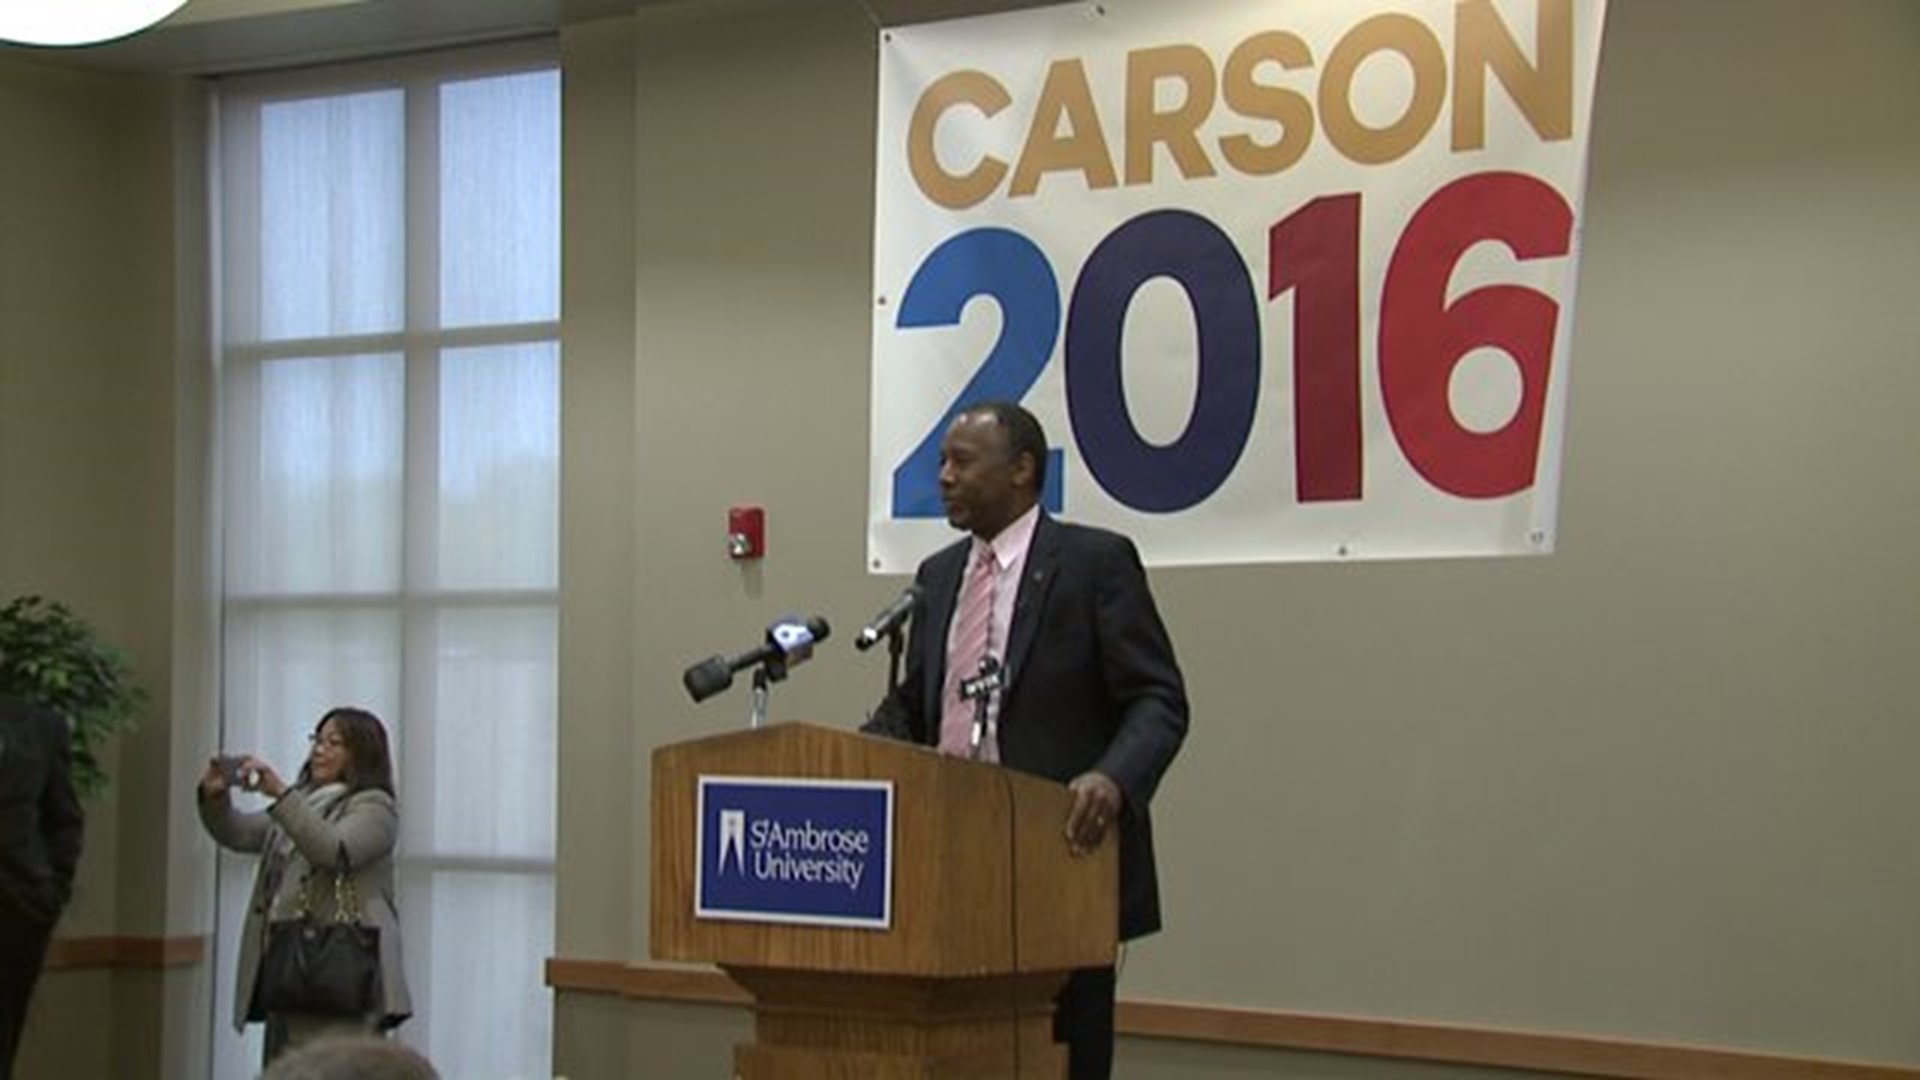 Republican candidate Ben Carson makes campaign stop in Davenport